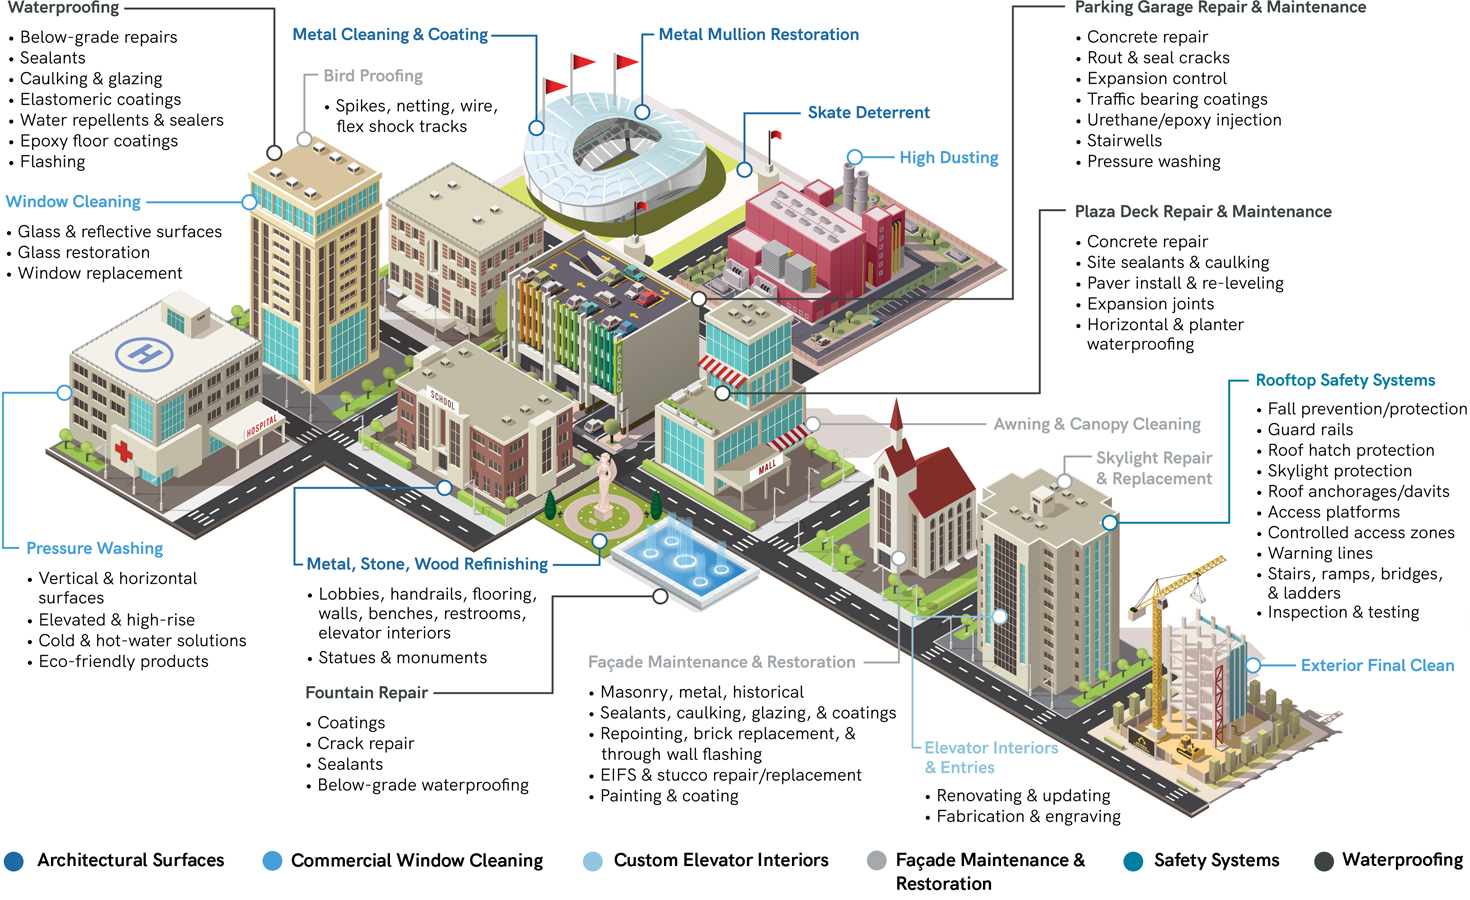 Building Services Diagram